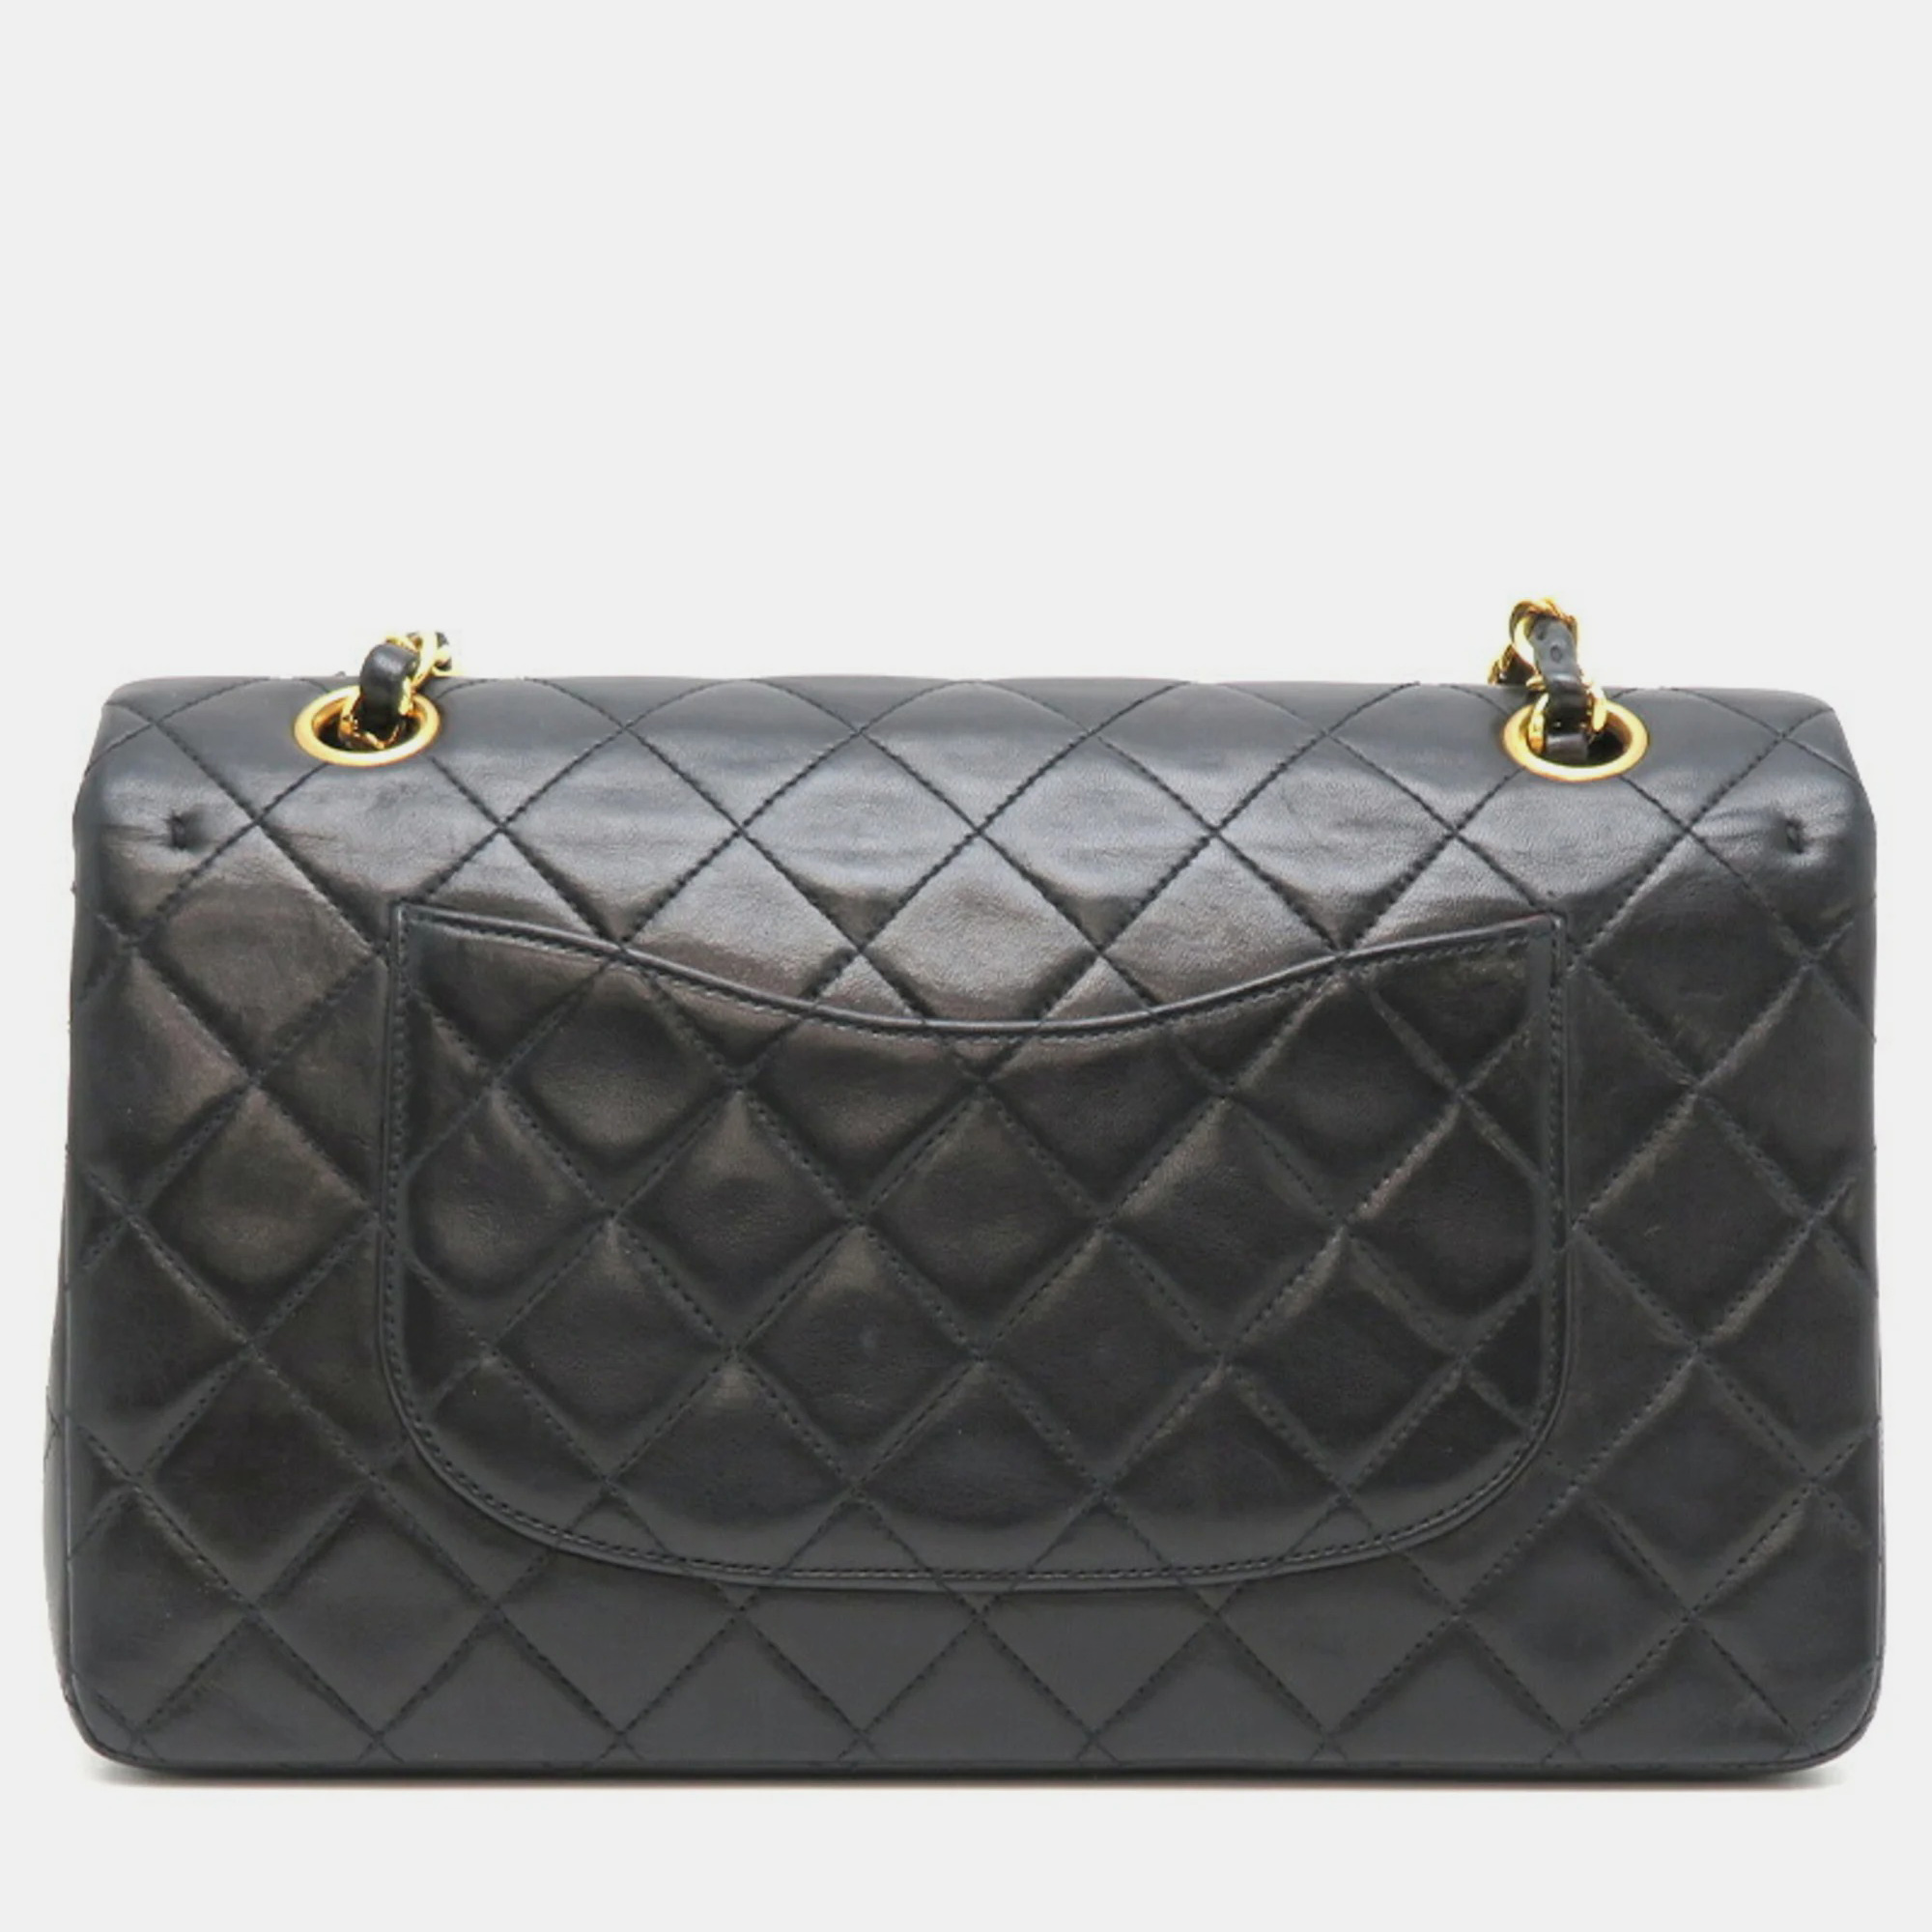 Chanel Black Leather Classic Medium Double Flap Shoulder Bag